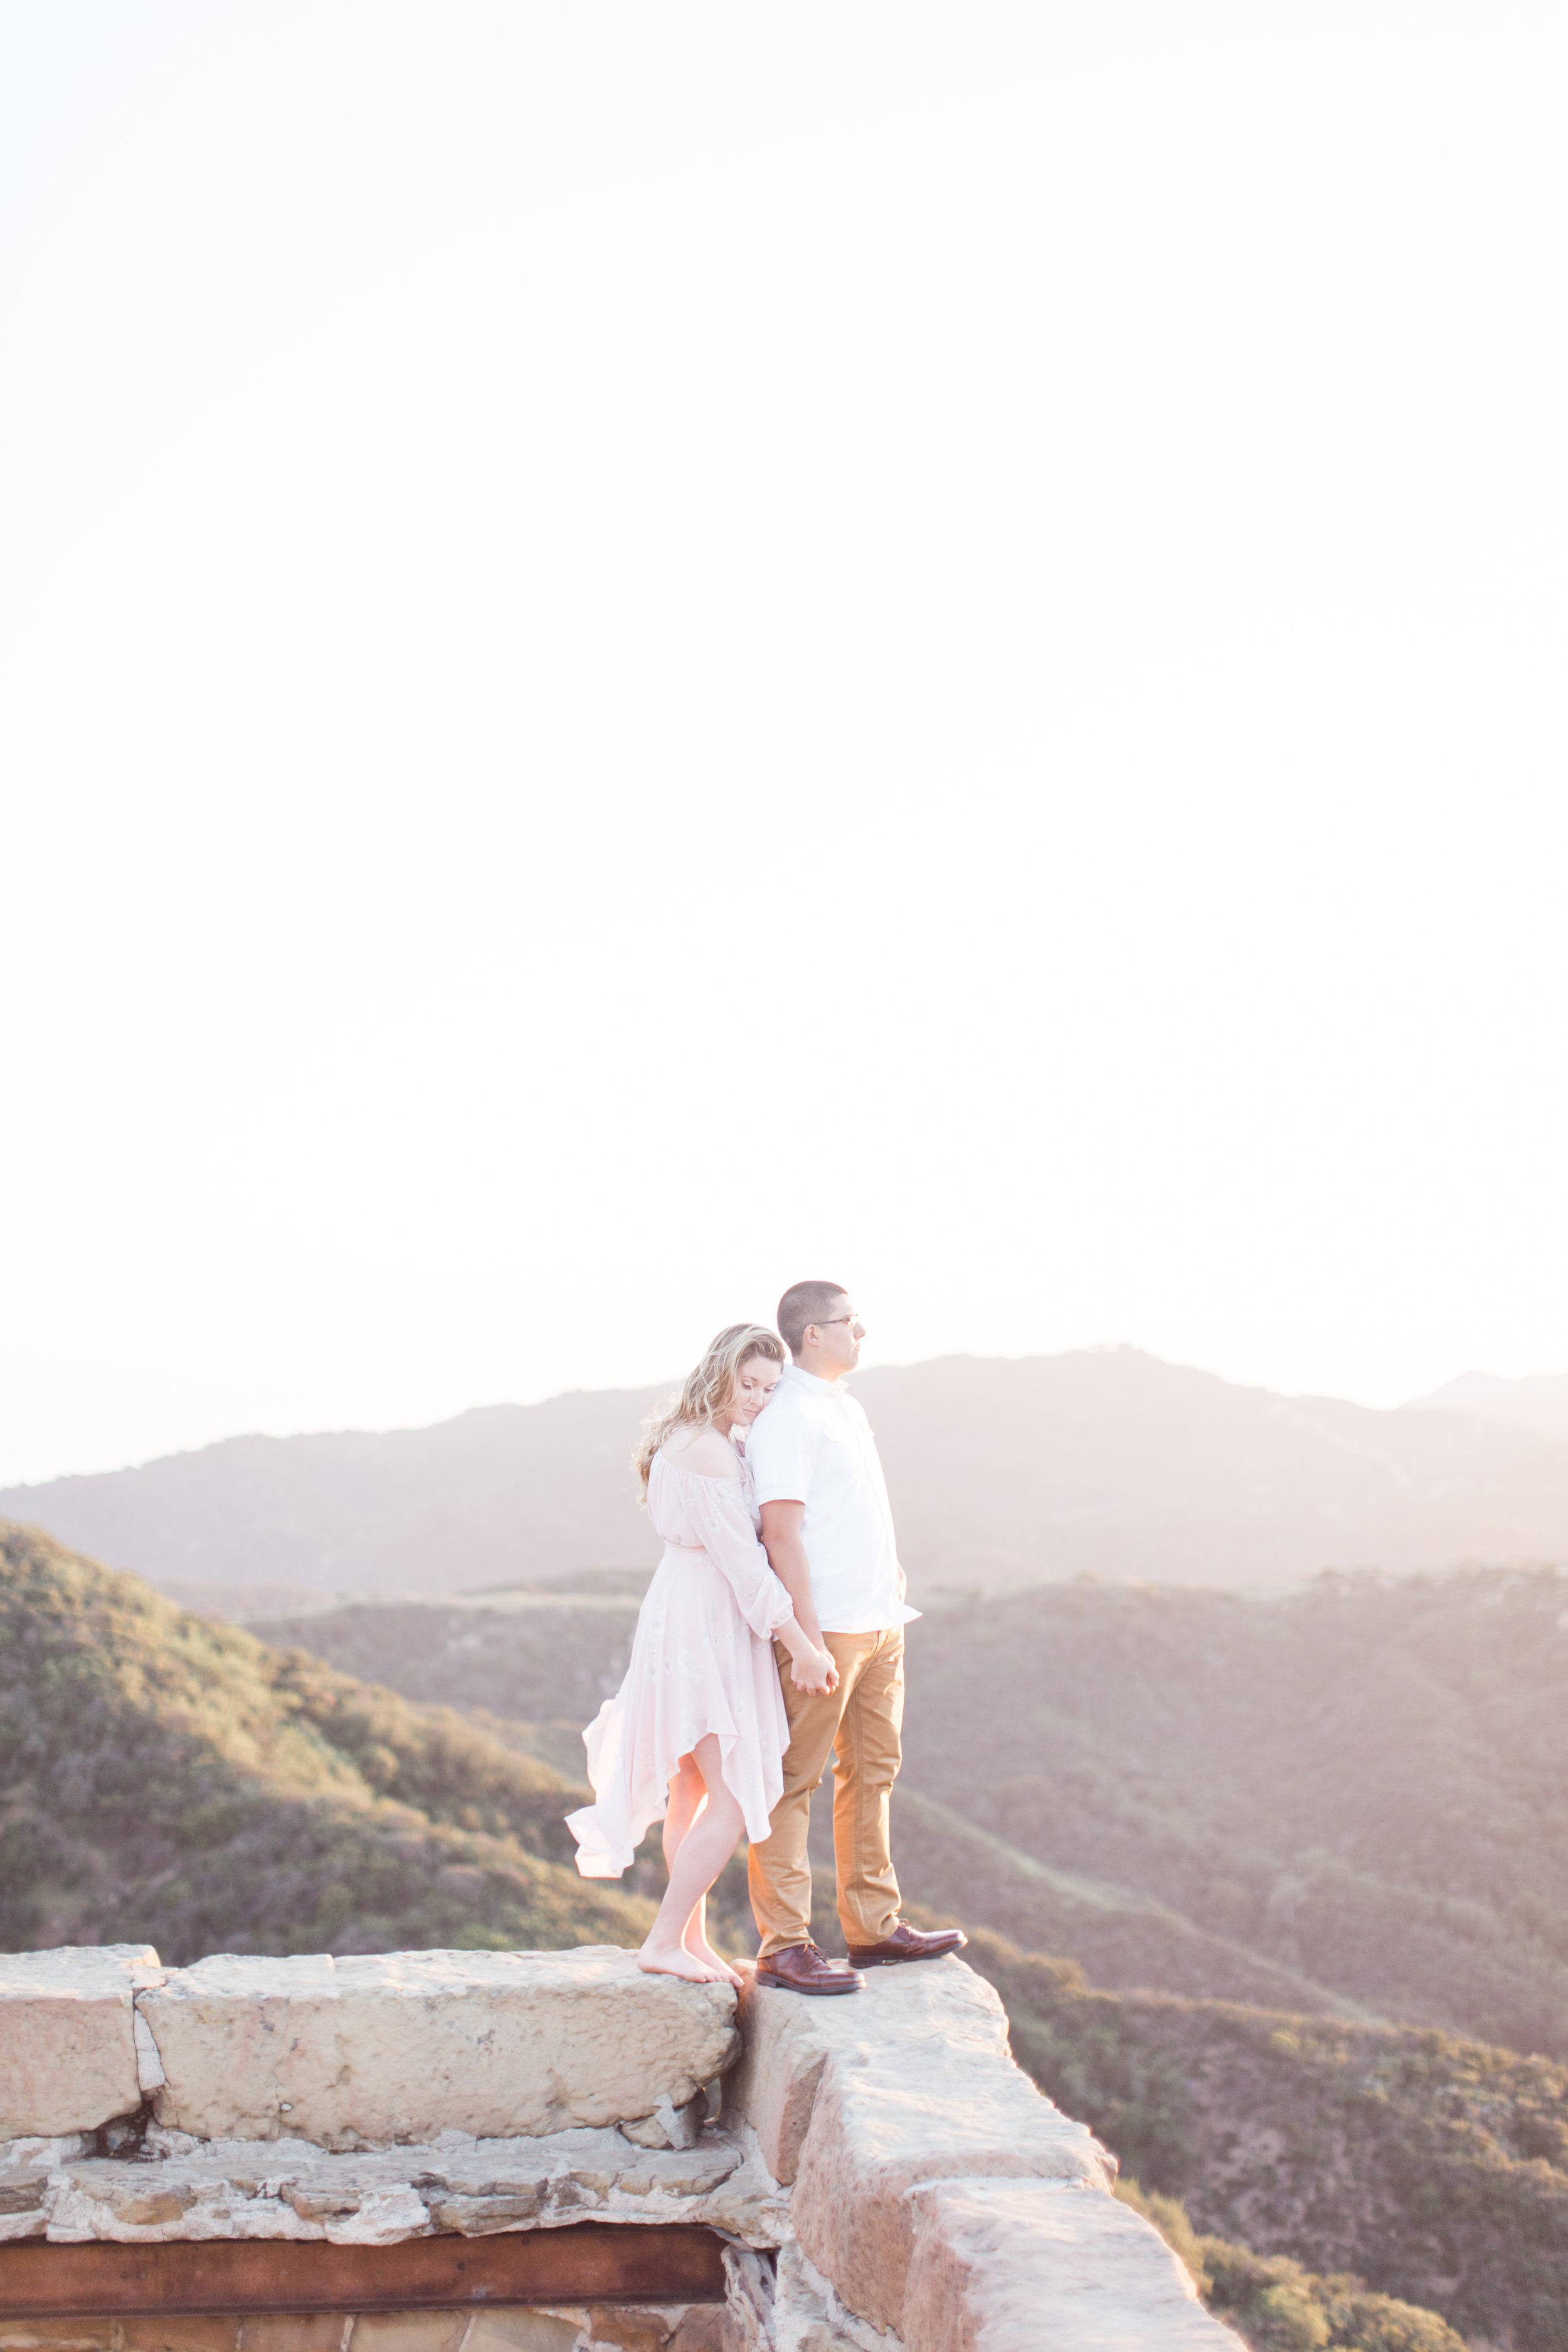 Santa Barbara Mountains Engagement Photos - The Overwhelmed Bride Wedding Blog